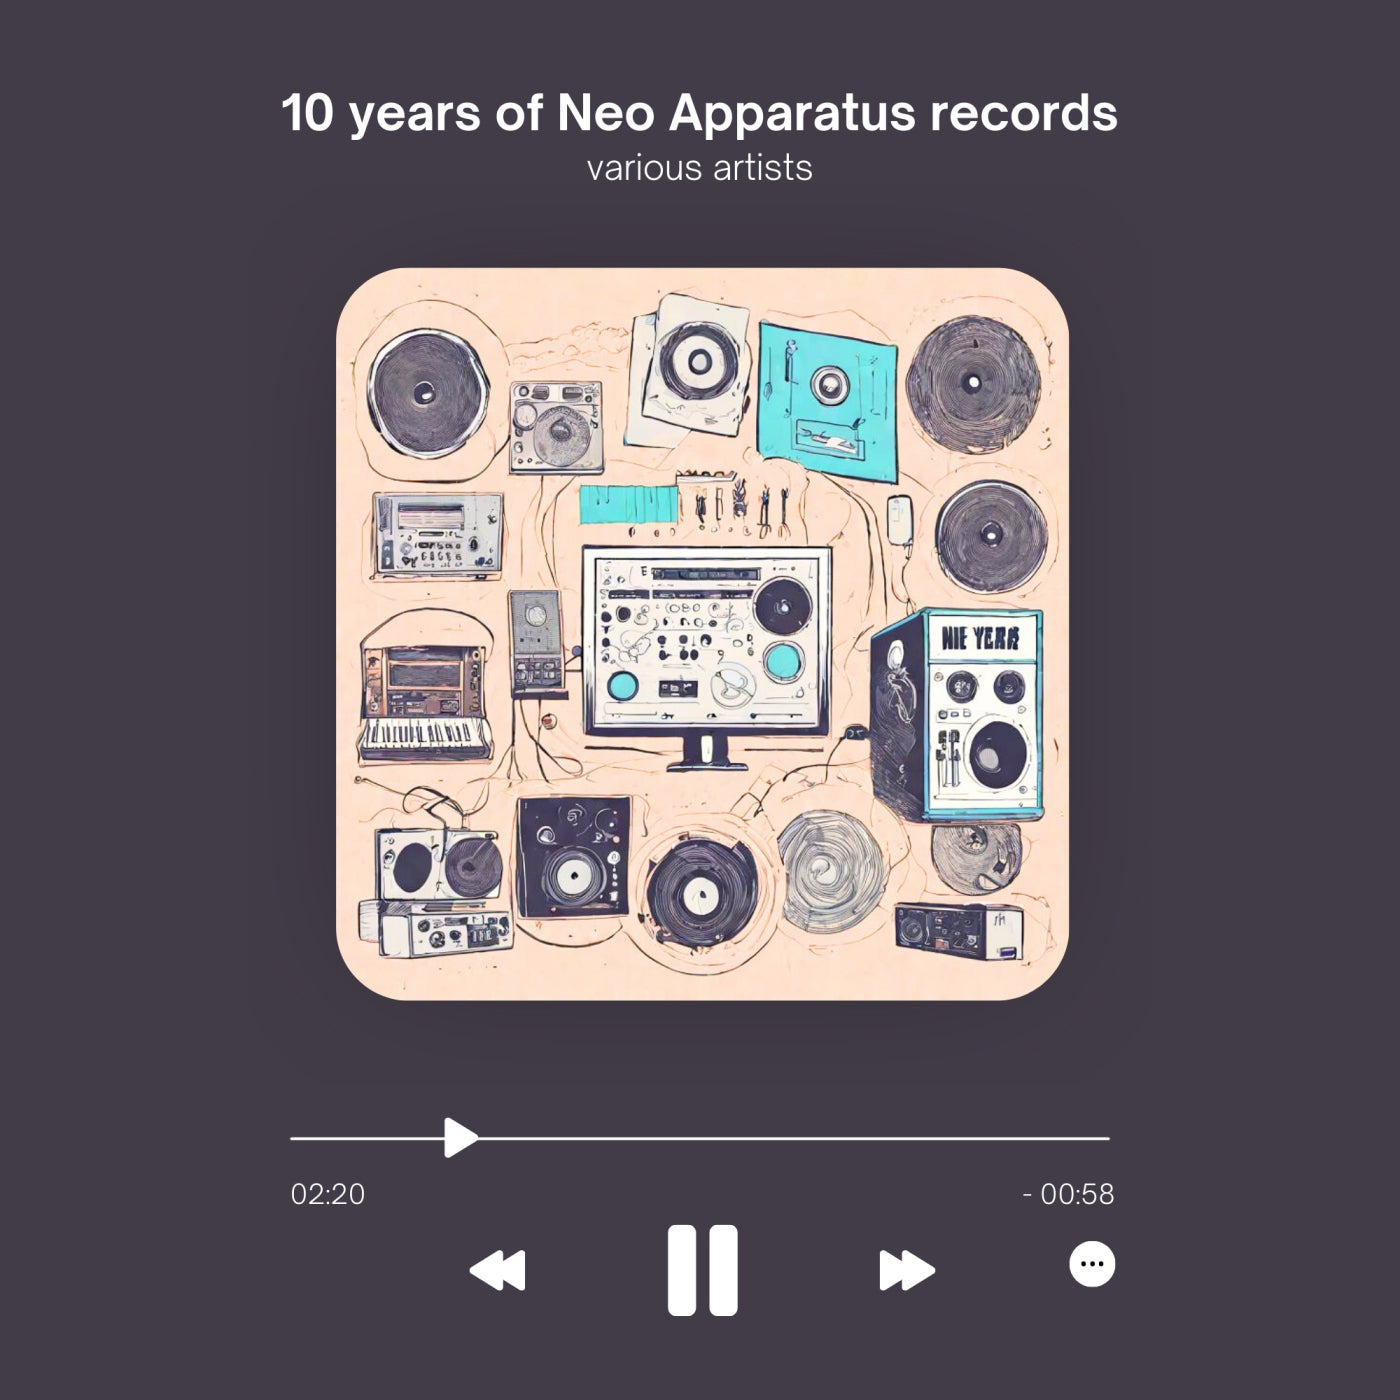 Ten years of Neo Apparatus records